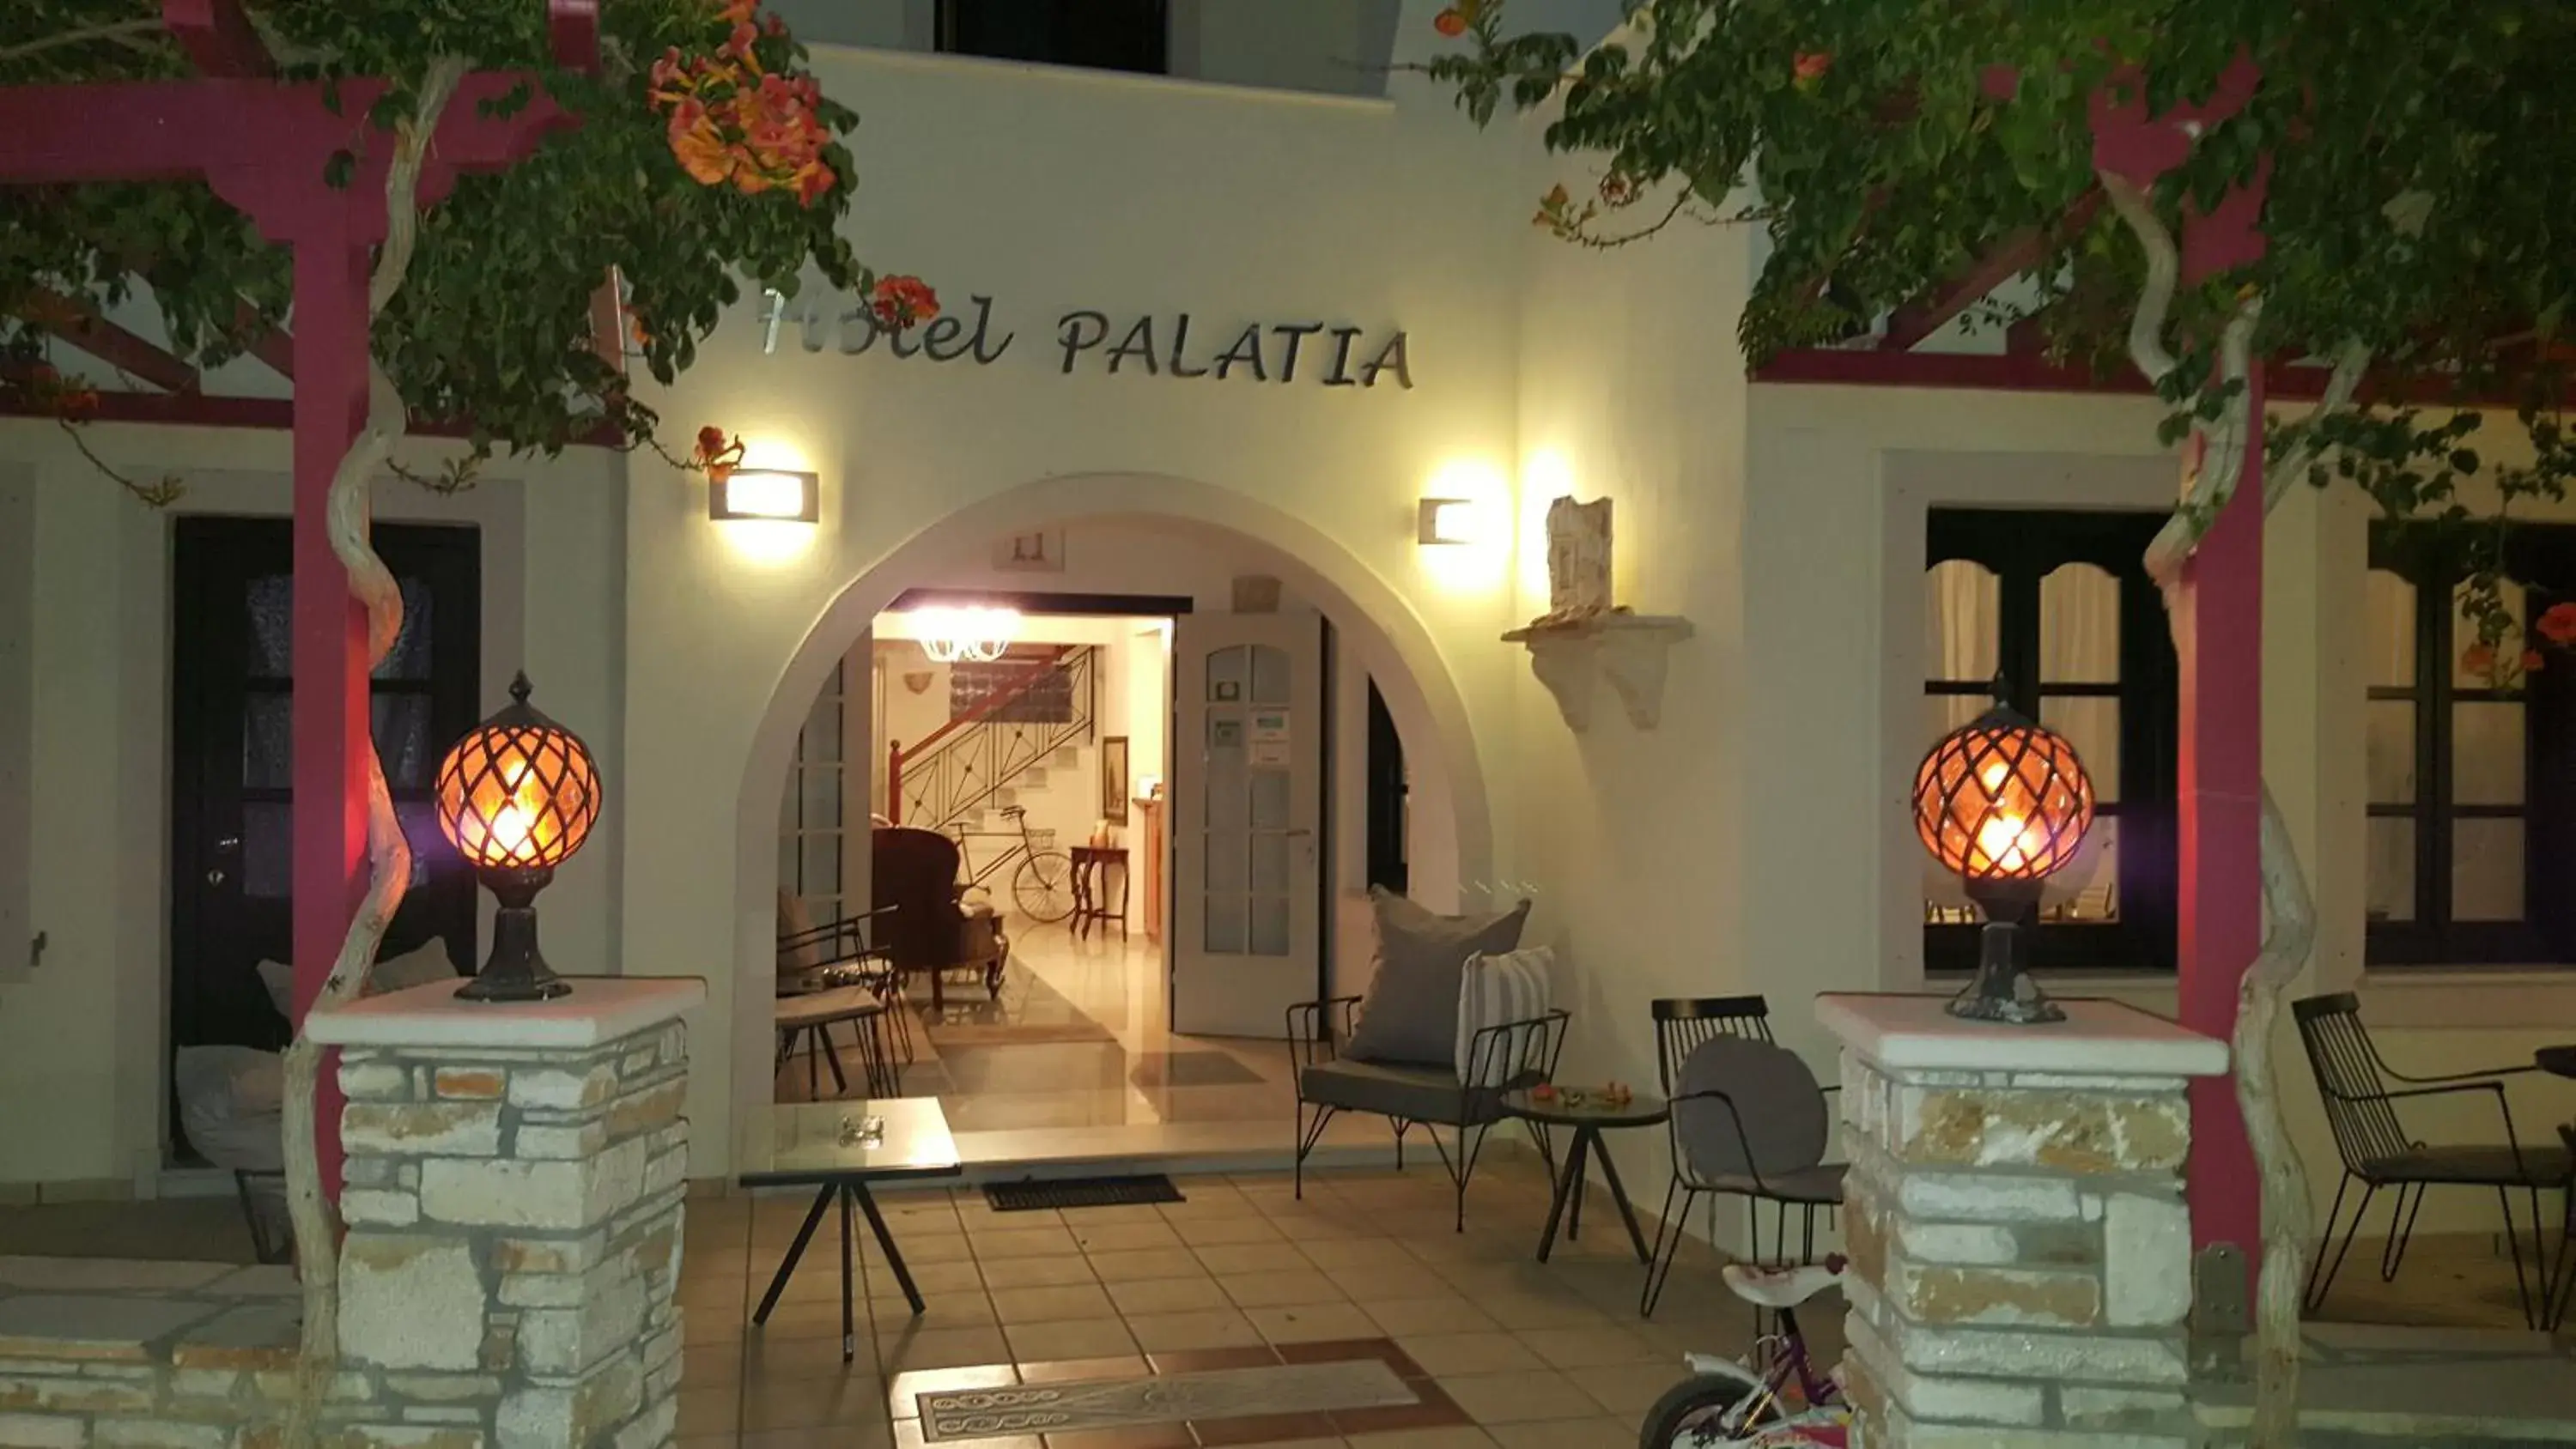 Facade/entrance in Hotel Palatia